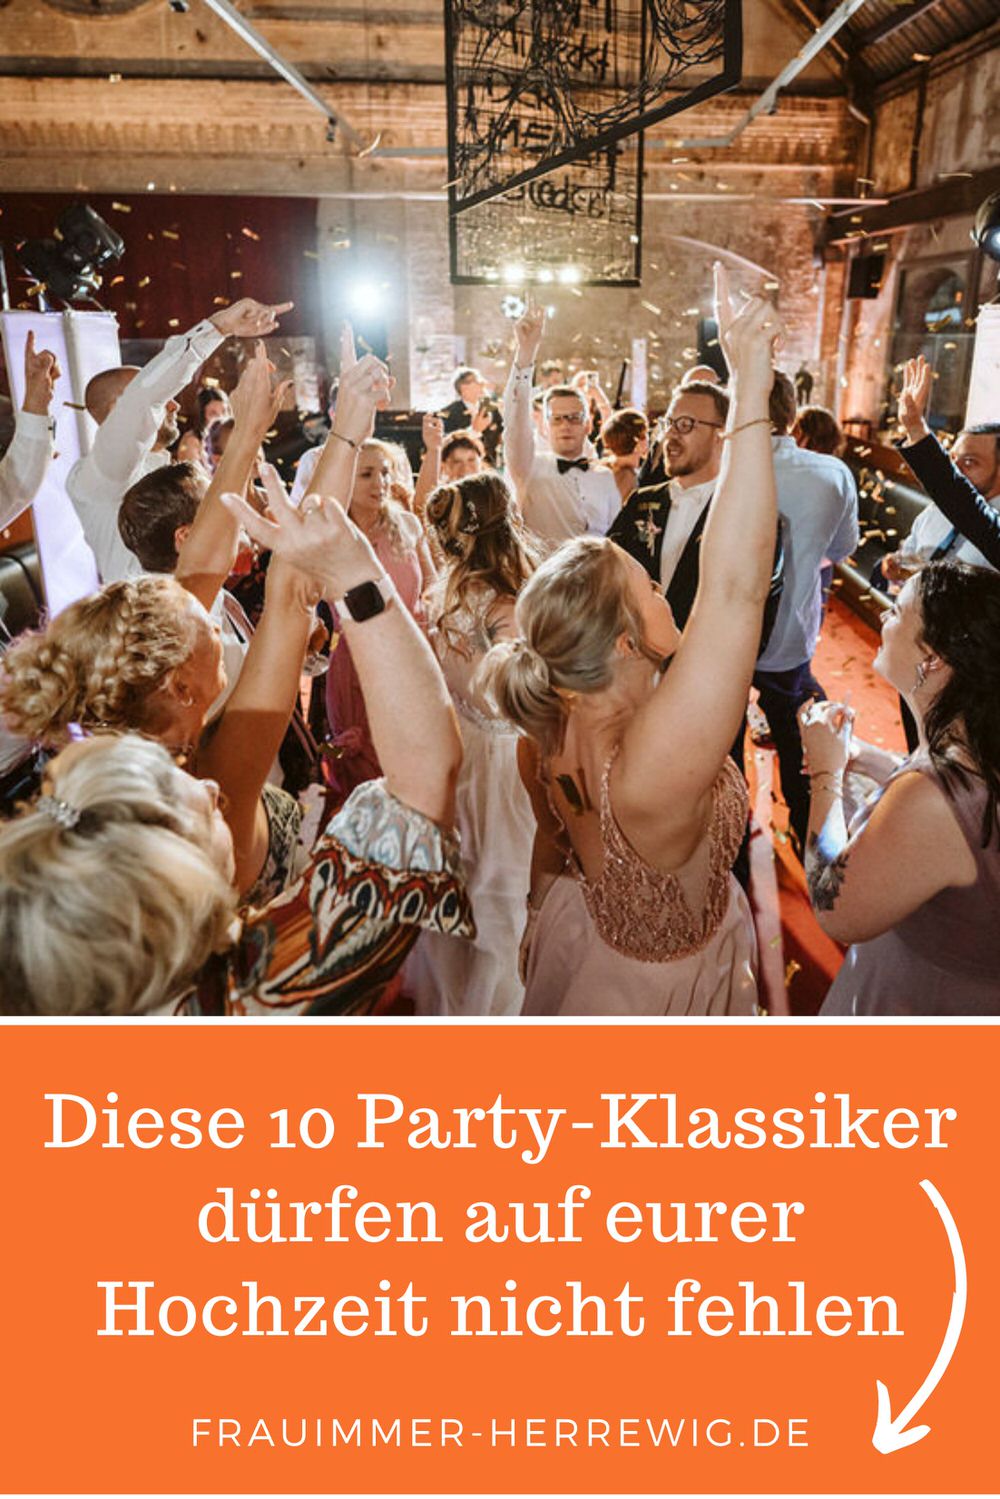 Hochzeits party klassiker – gesehen bei frauimmer-herrewig.de